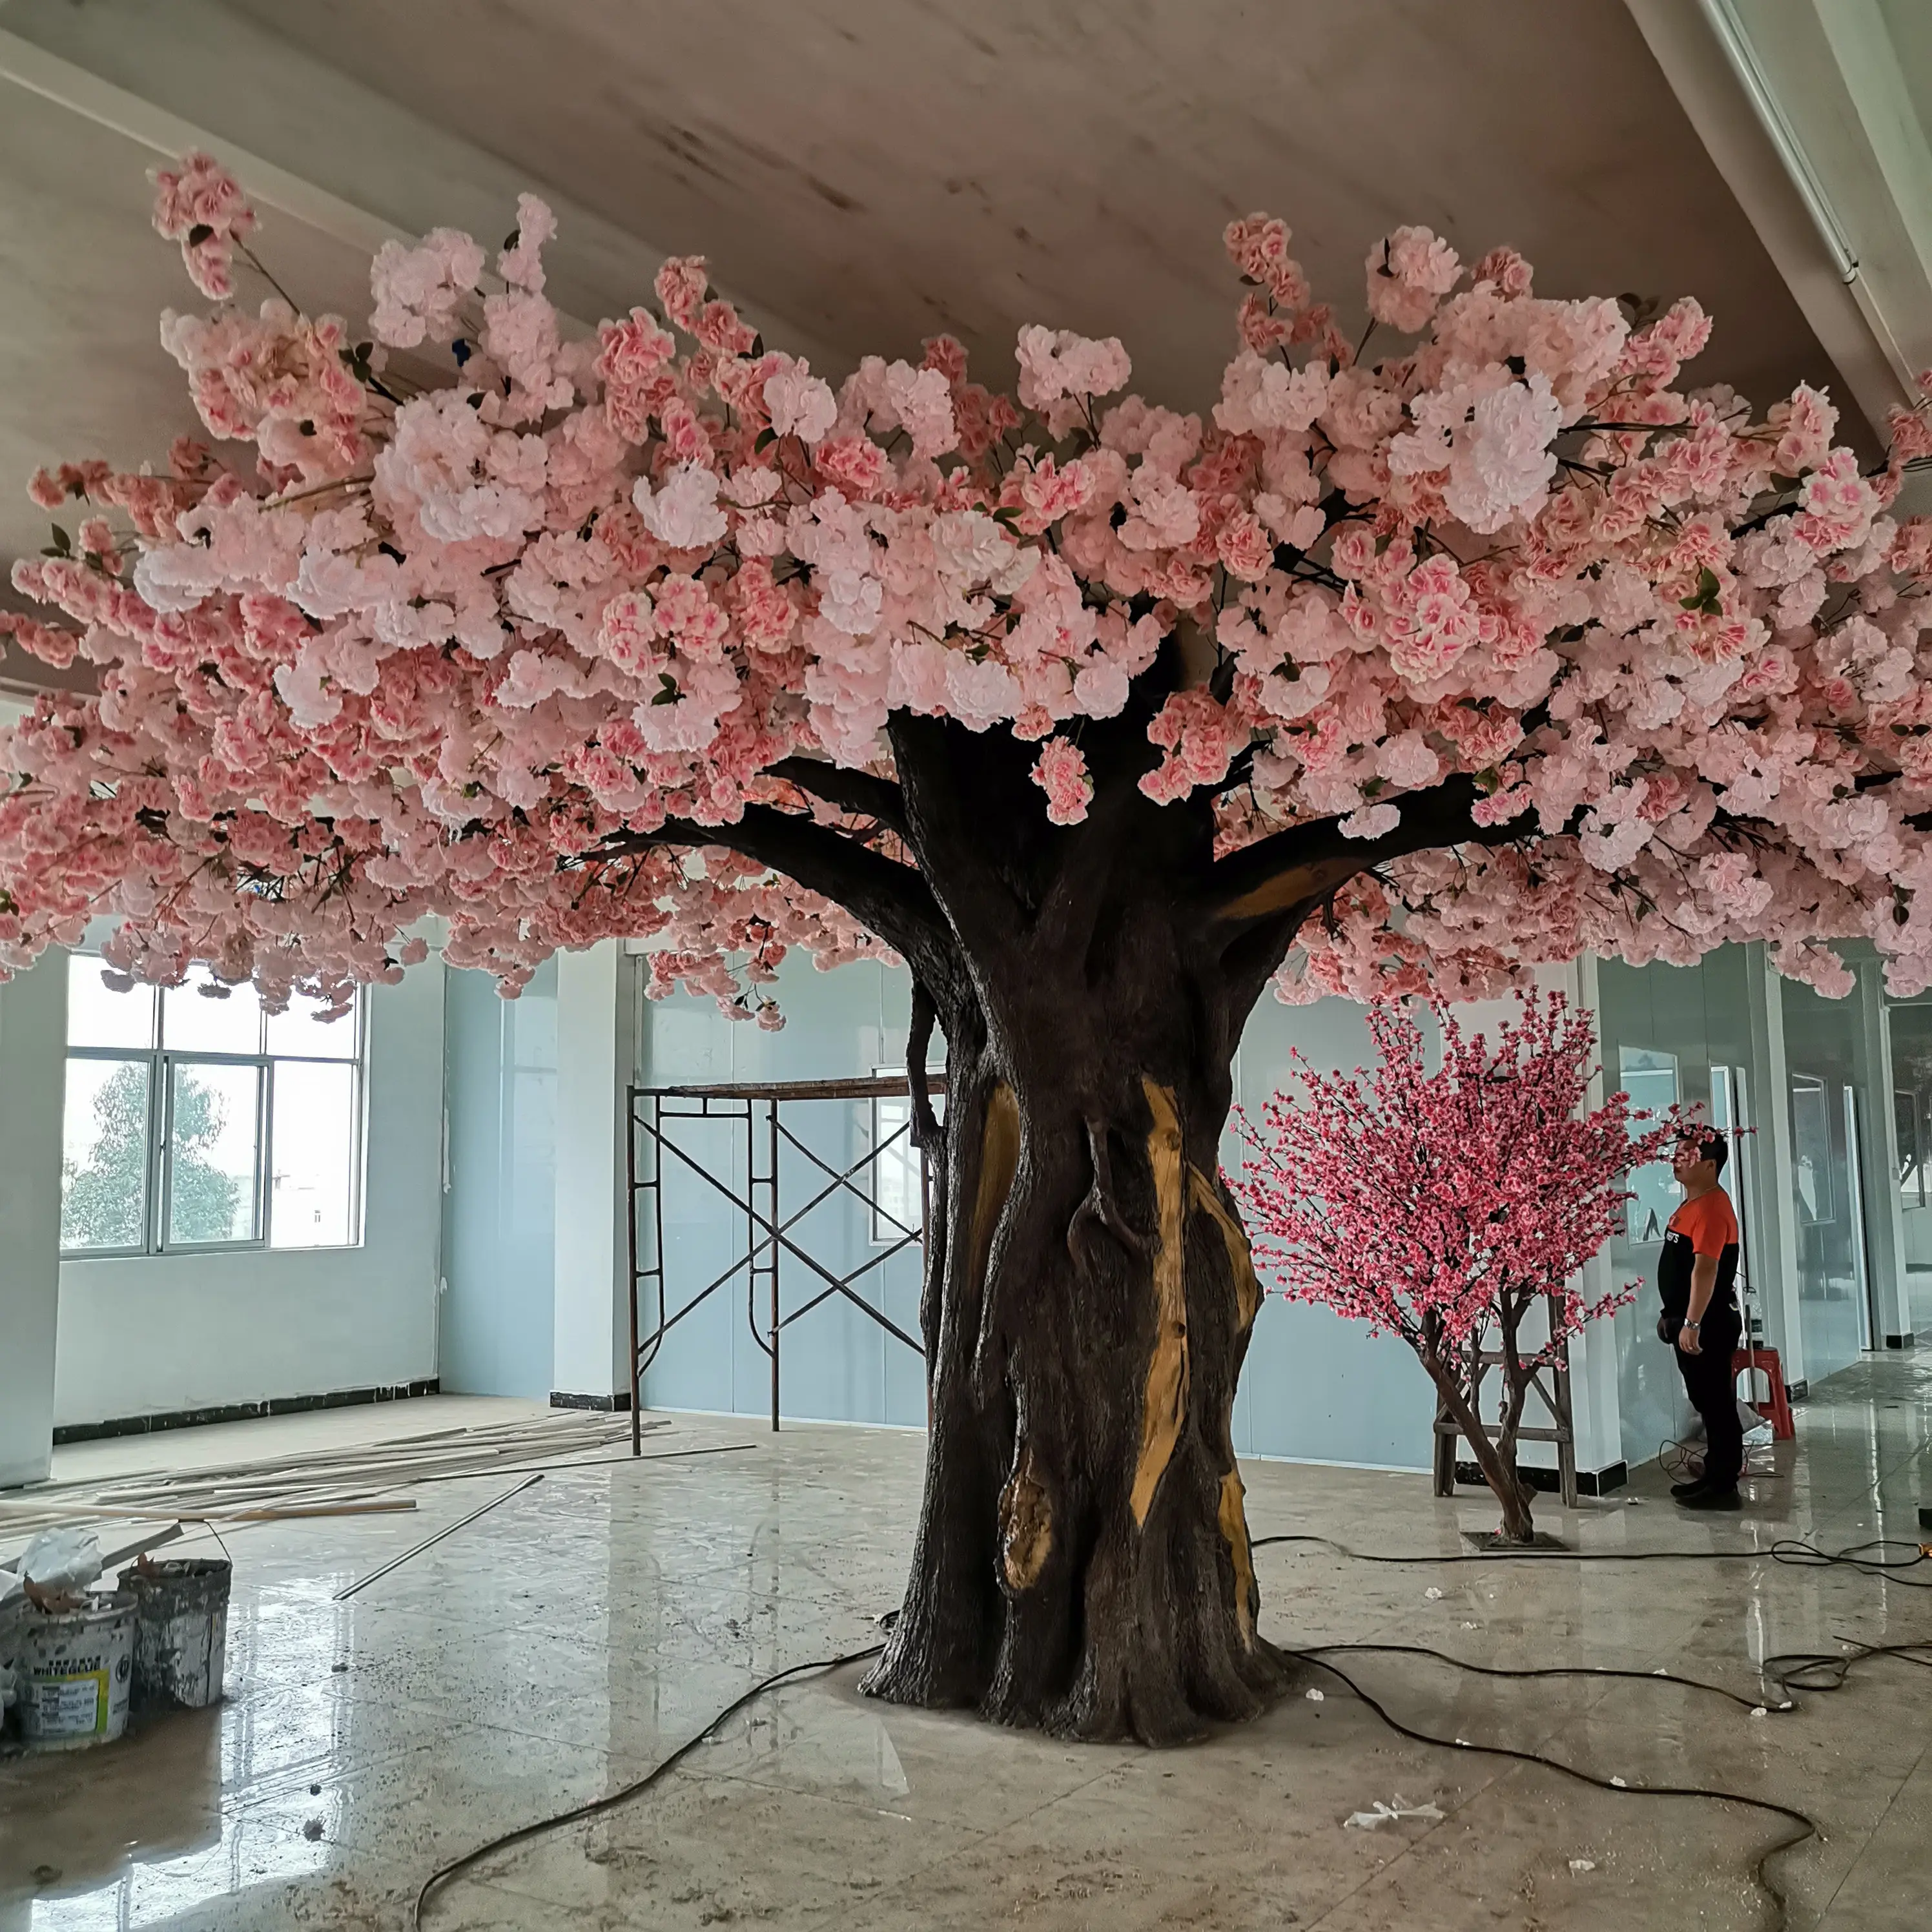 Ot-venta de flores de cerezo artificiales para interiores, rama de árbol de boda, arco de flores de cerezo artificiales